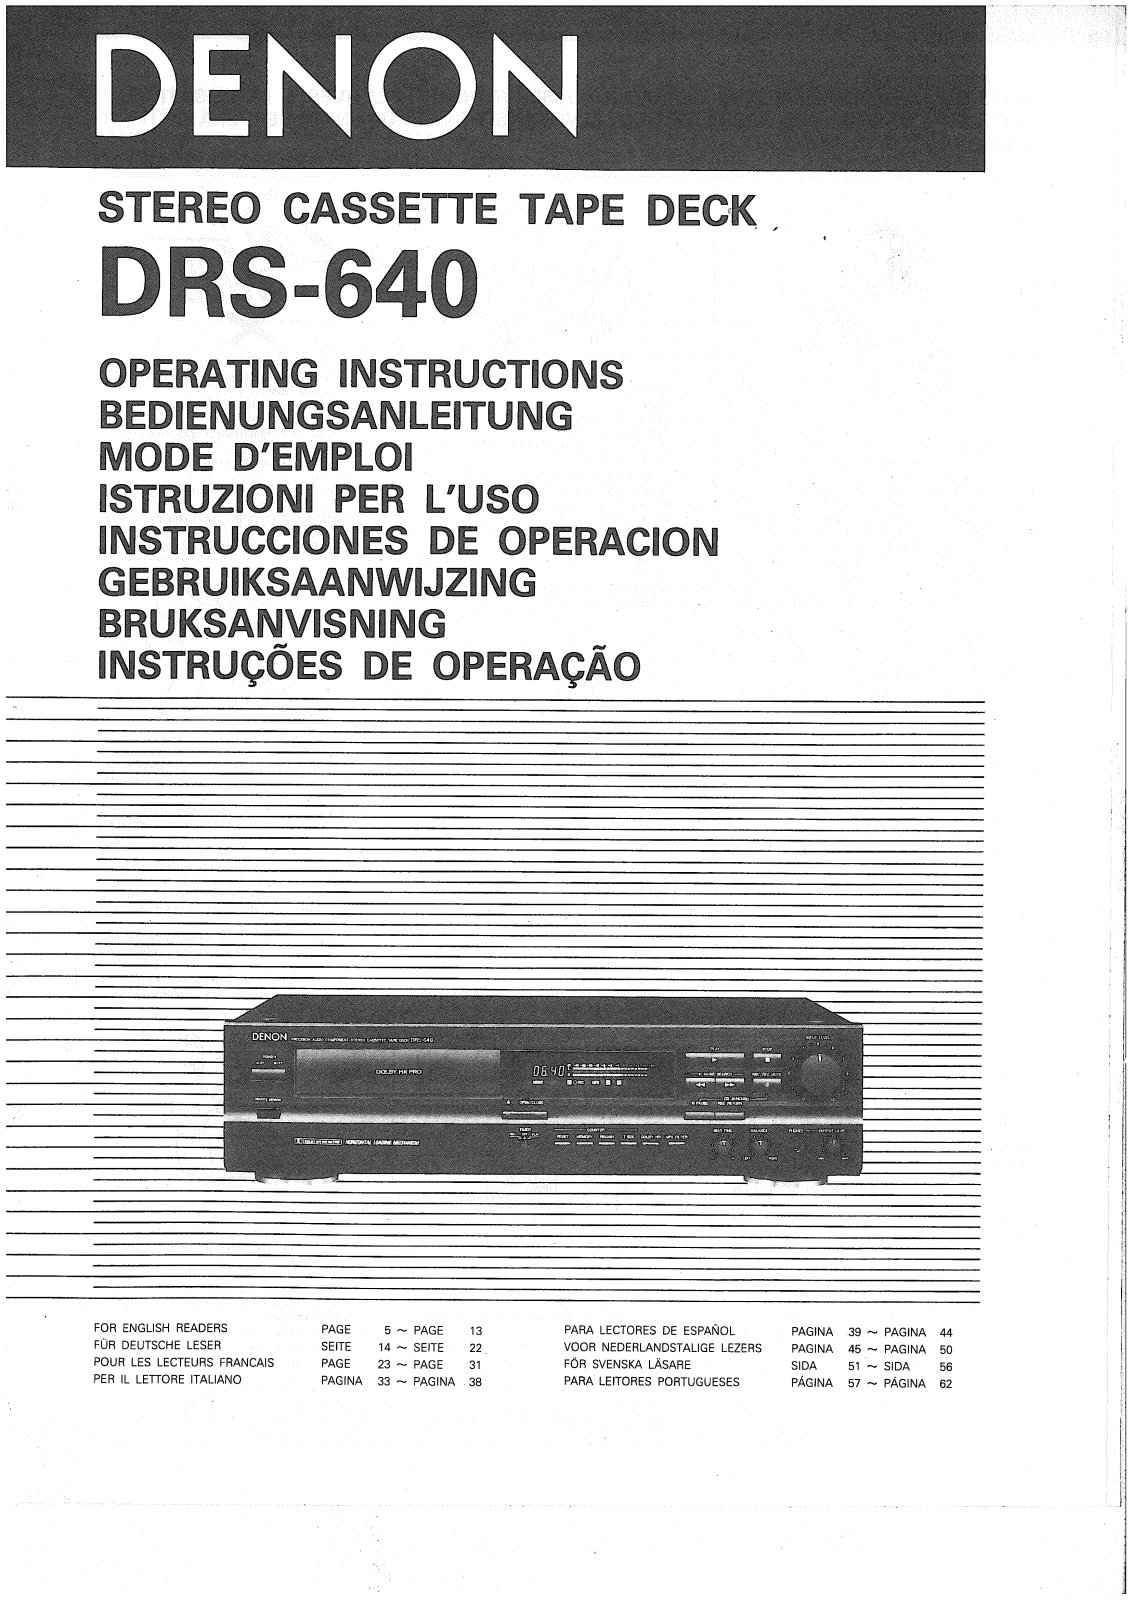 Denon DRS-640 Owner's Manual